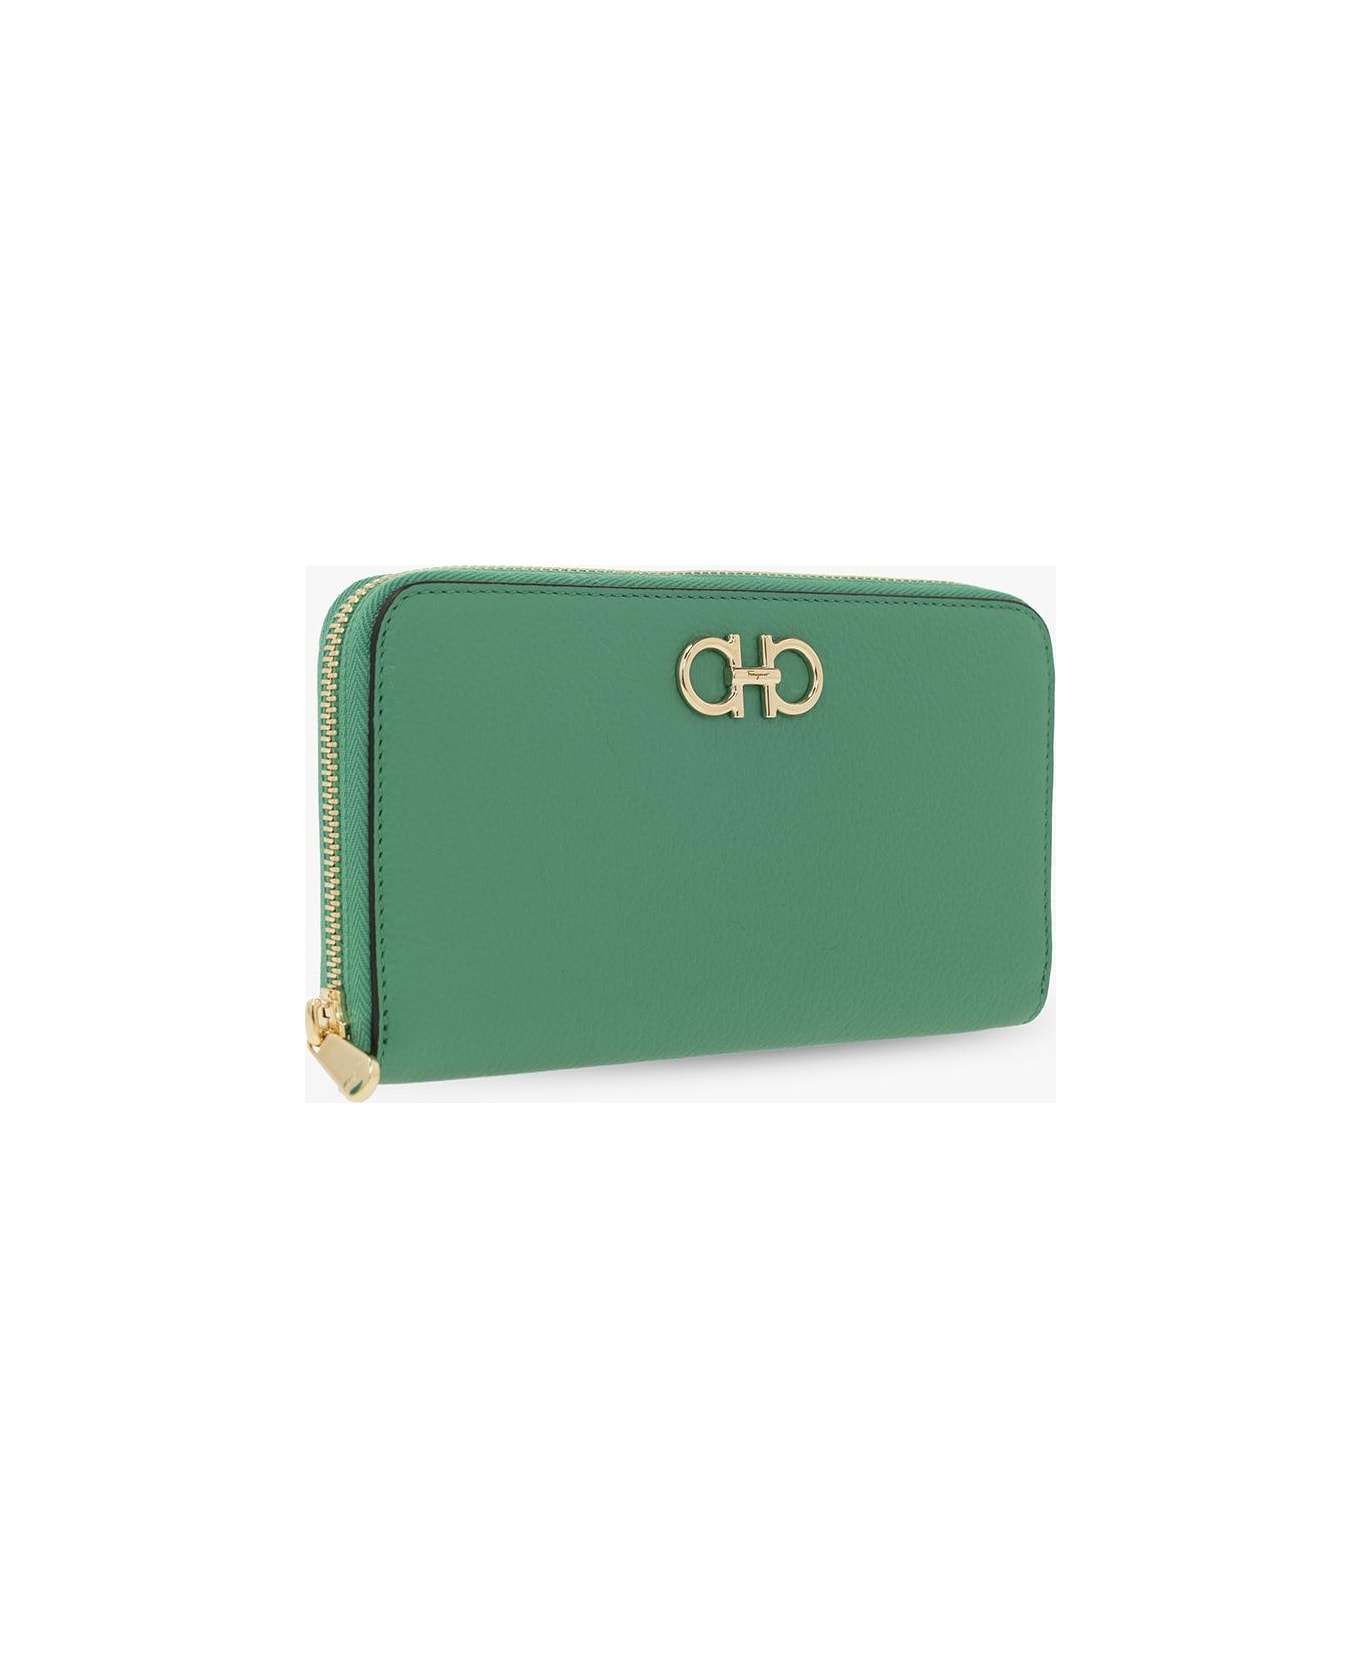 Ferragamo Leather Wallet With Logo - Green 財布